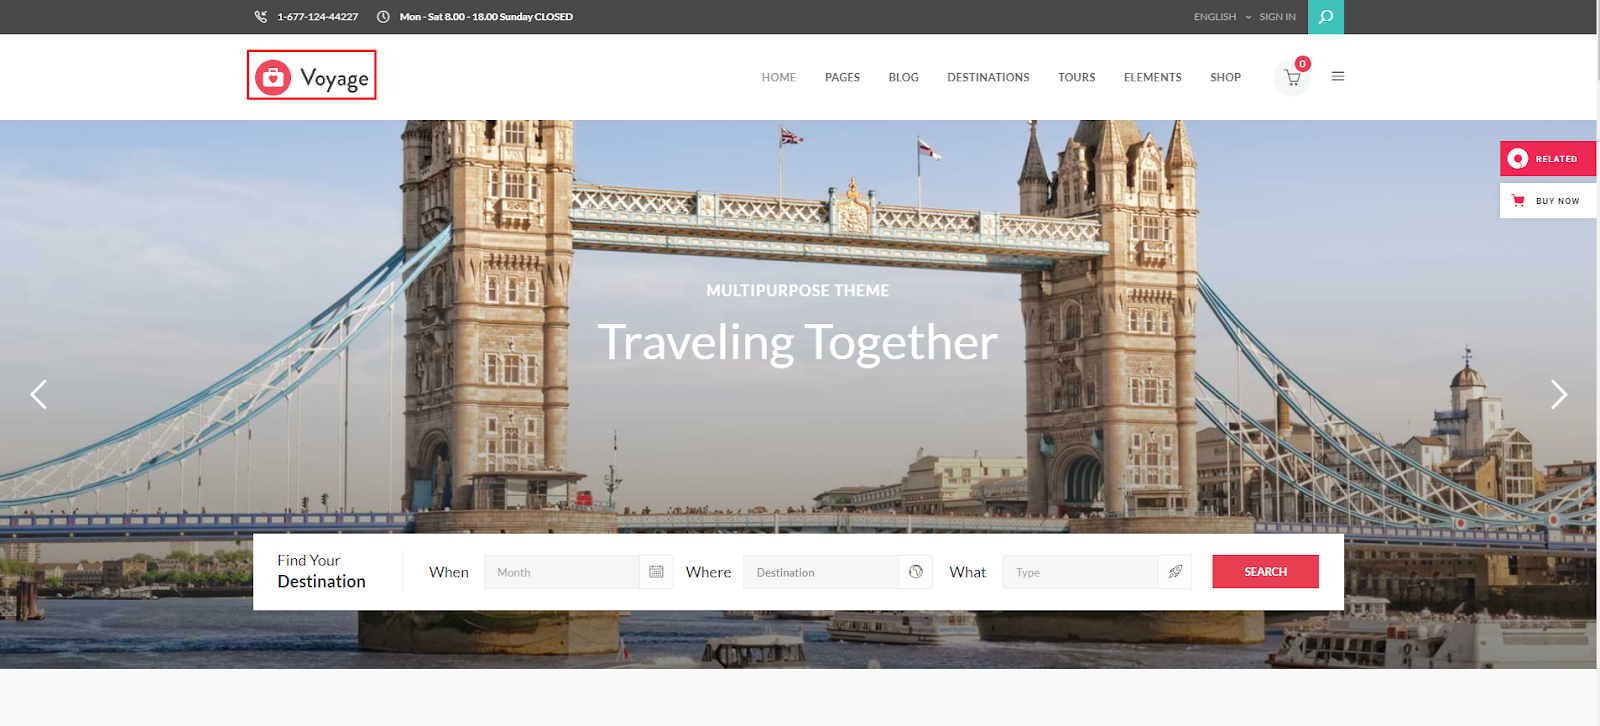 Voyage Travel and Tour Booking WordPress Theme